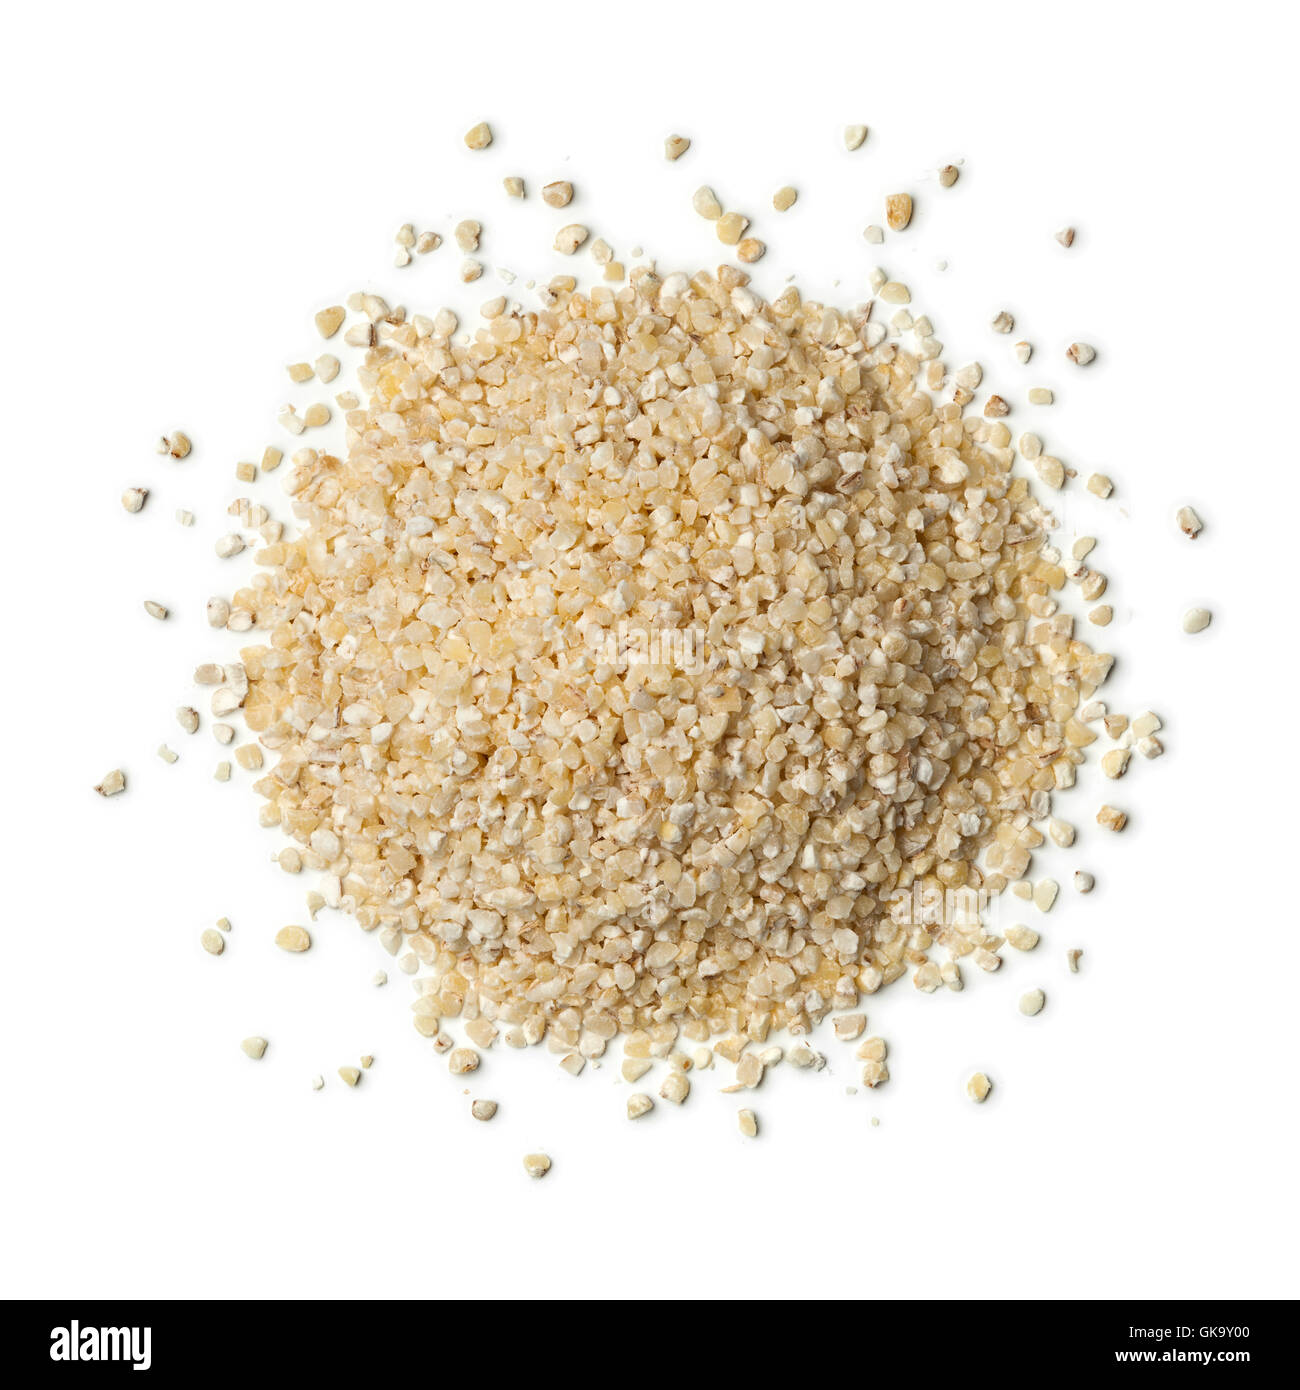 Heap of broken barley seeds on white background Stock Photo